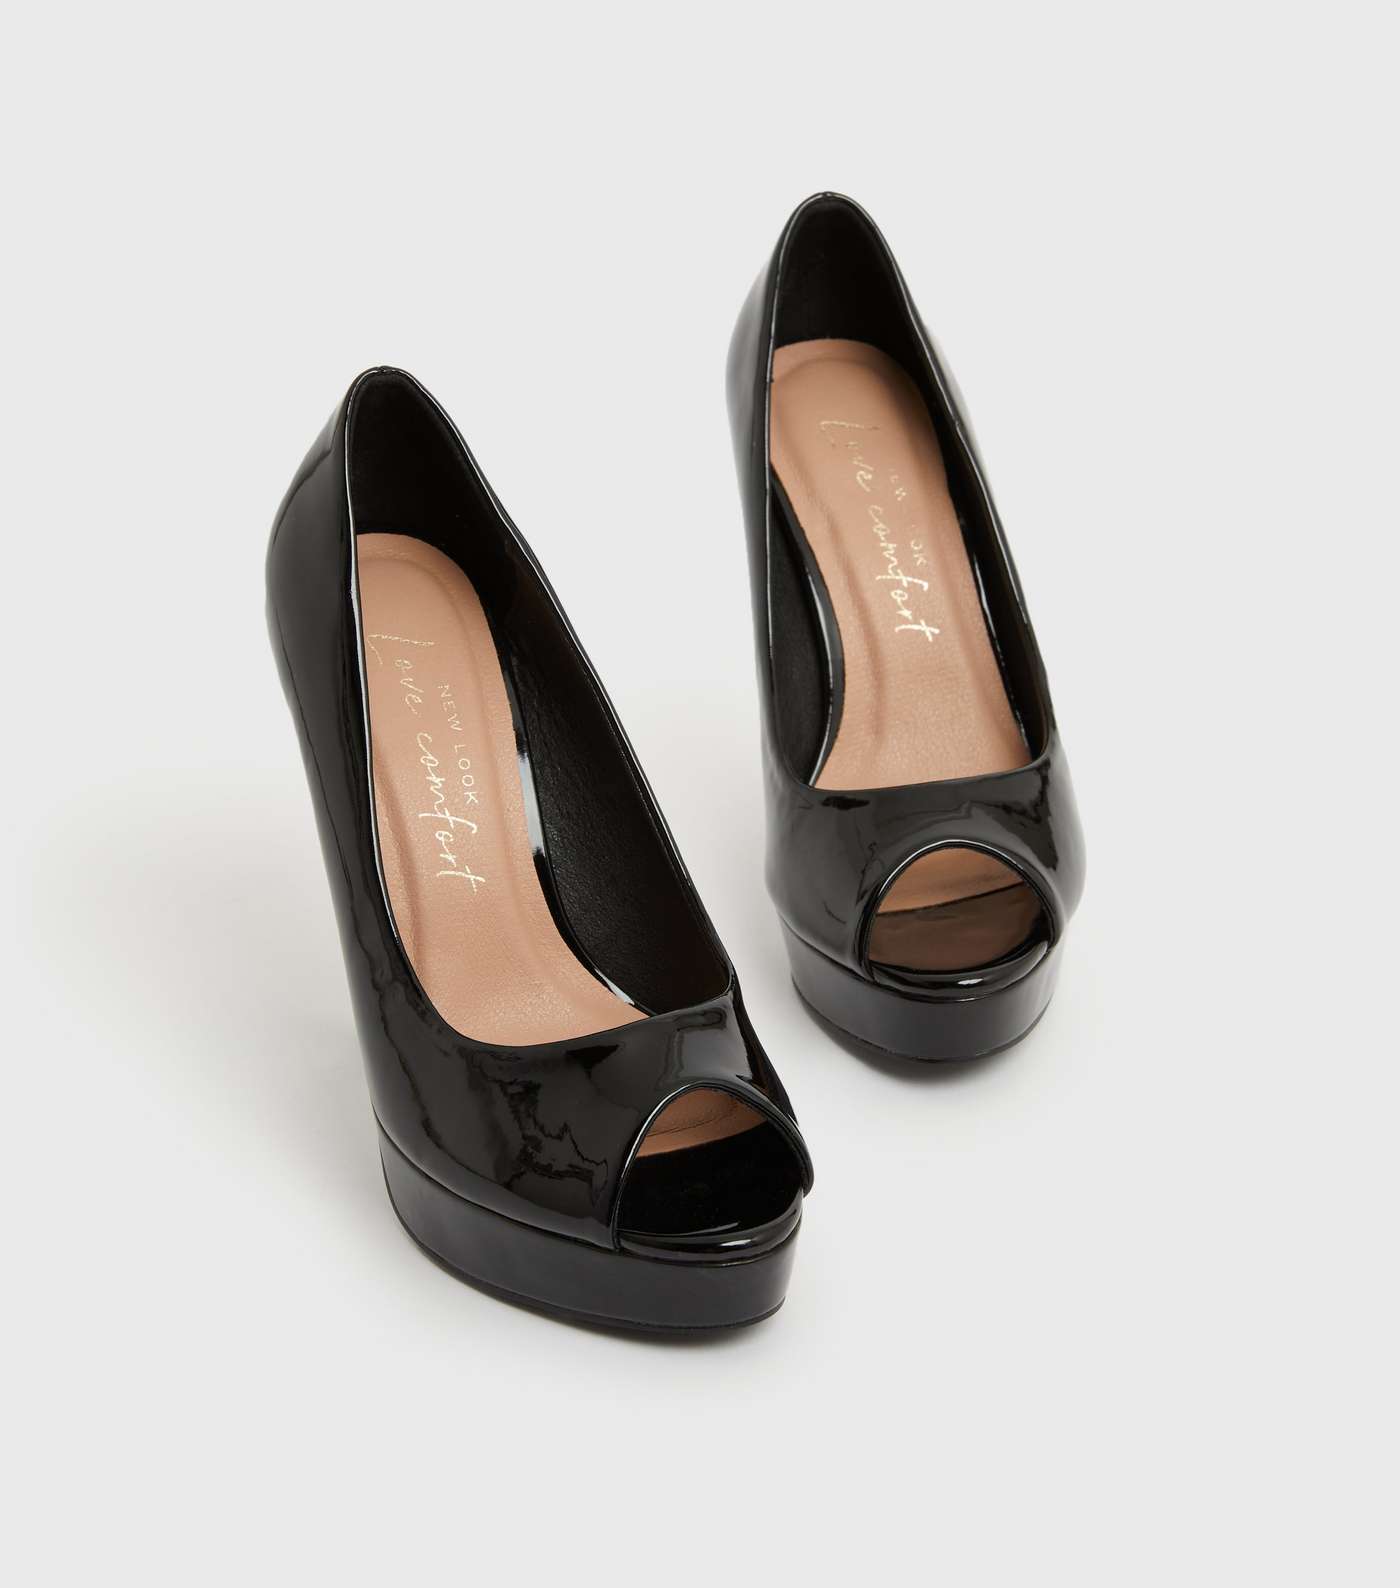 Black Patent Stiletto Heel Platform Court Shoes Image 3